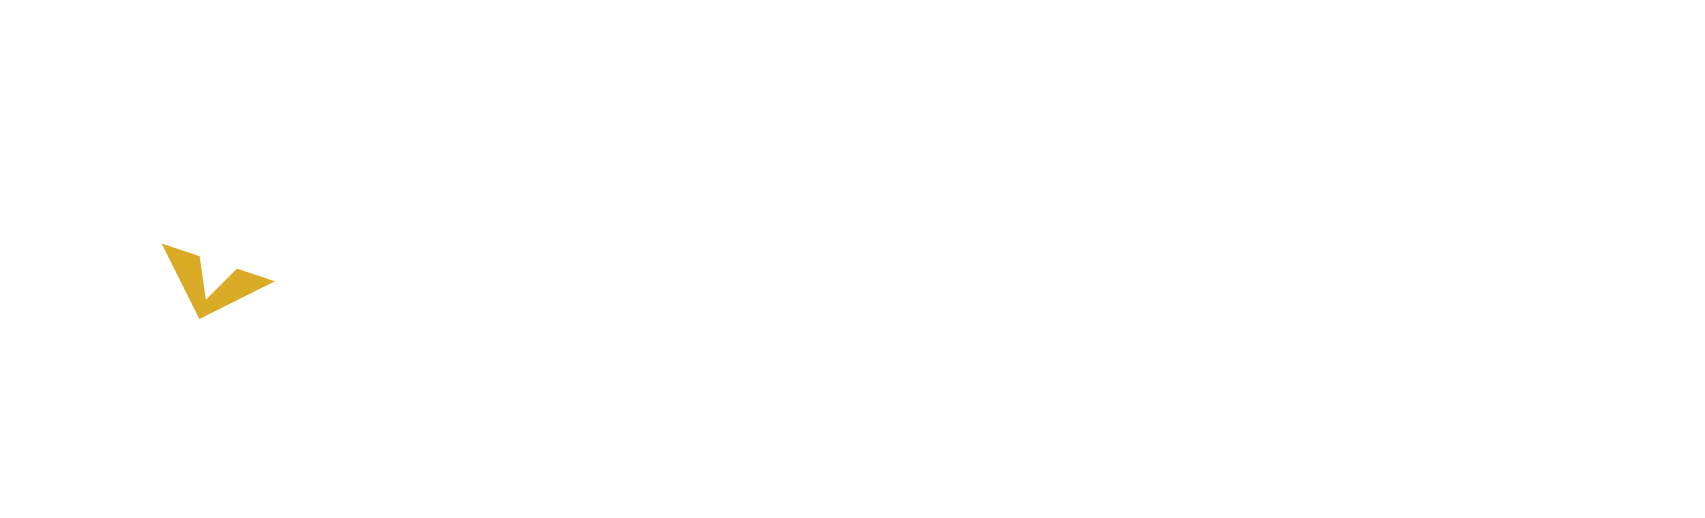 Black Cat Launch System